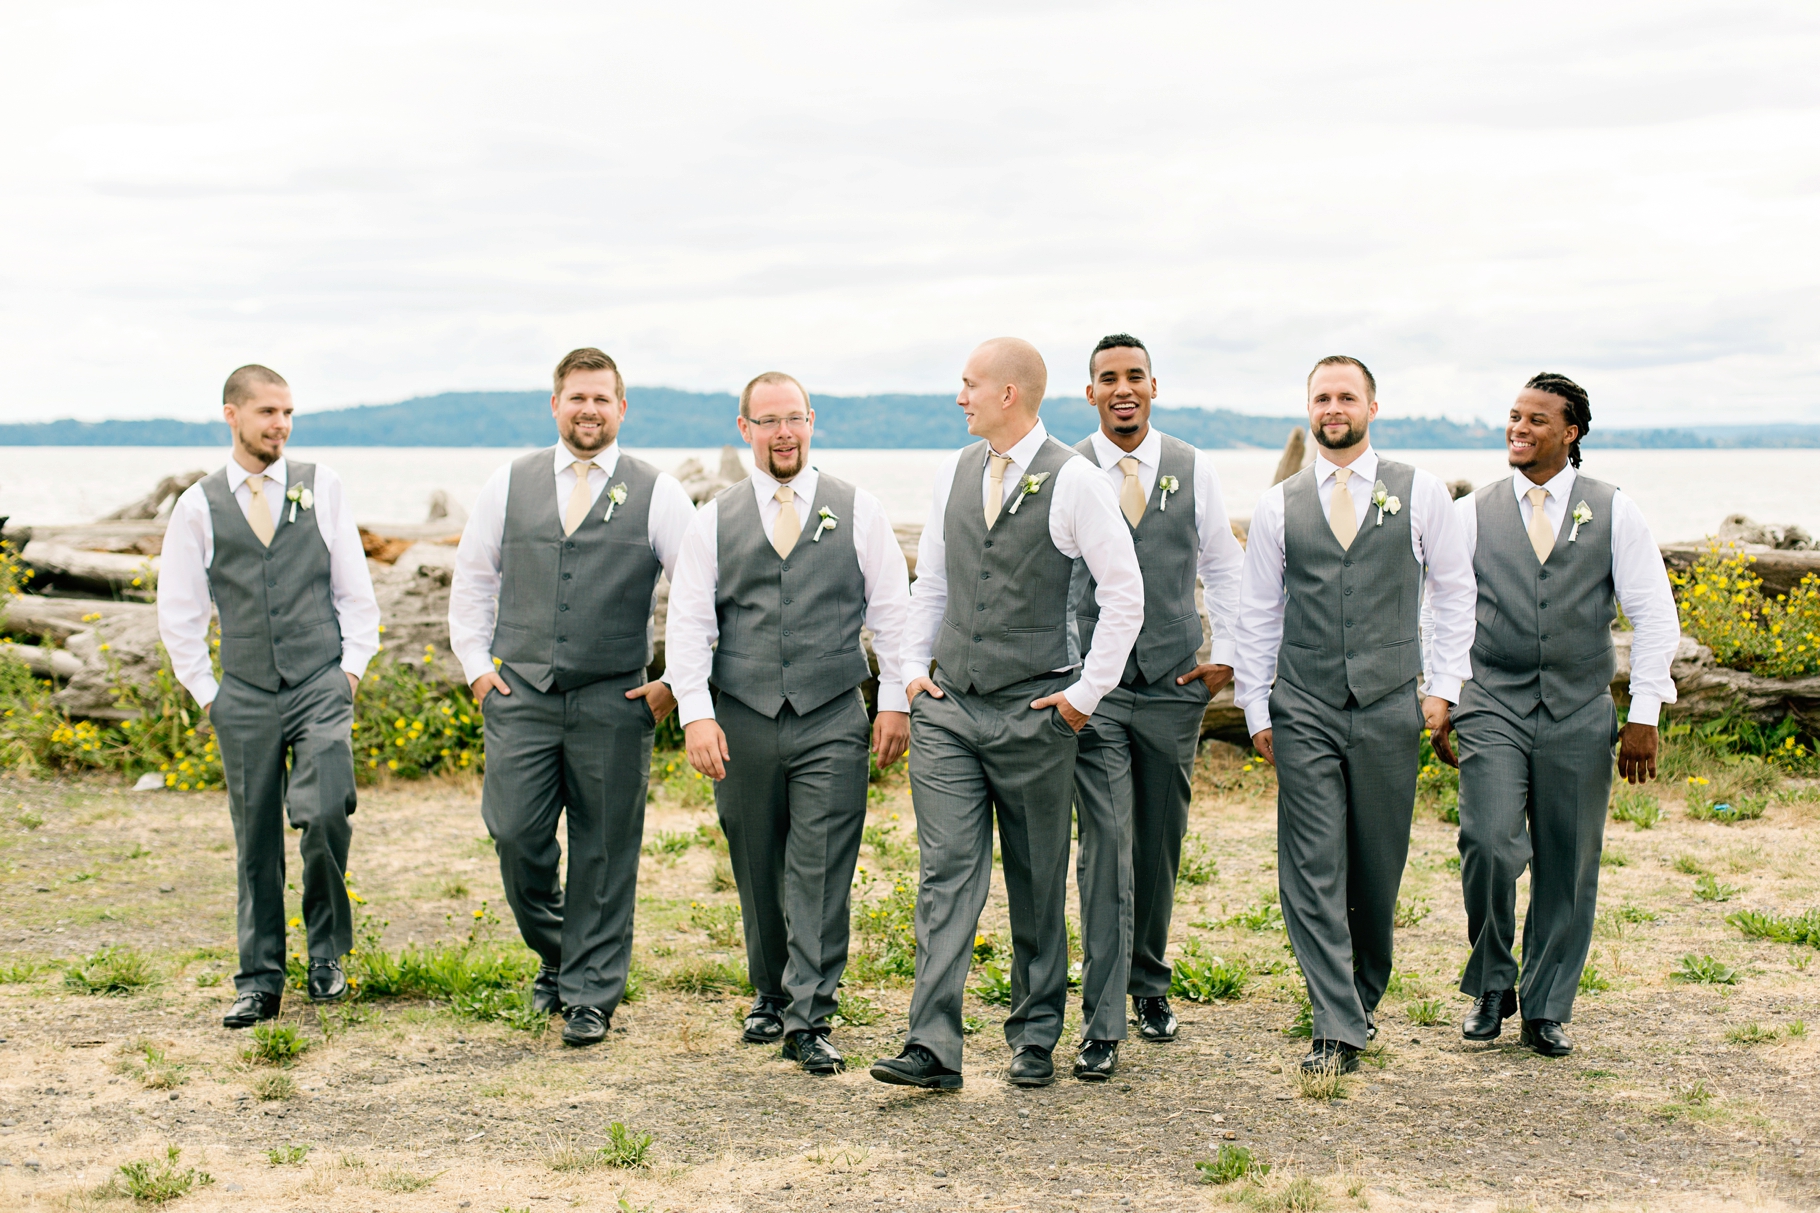 17-Groom-Groomsmen-Portraits-Waterfront-Pudget-Sound-Driftwood-Normandy-Cove-Beach-Wedding-Photographer-Bride-Groom-Seattle-Wedding-Photography-Northwest